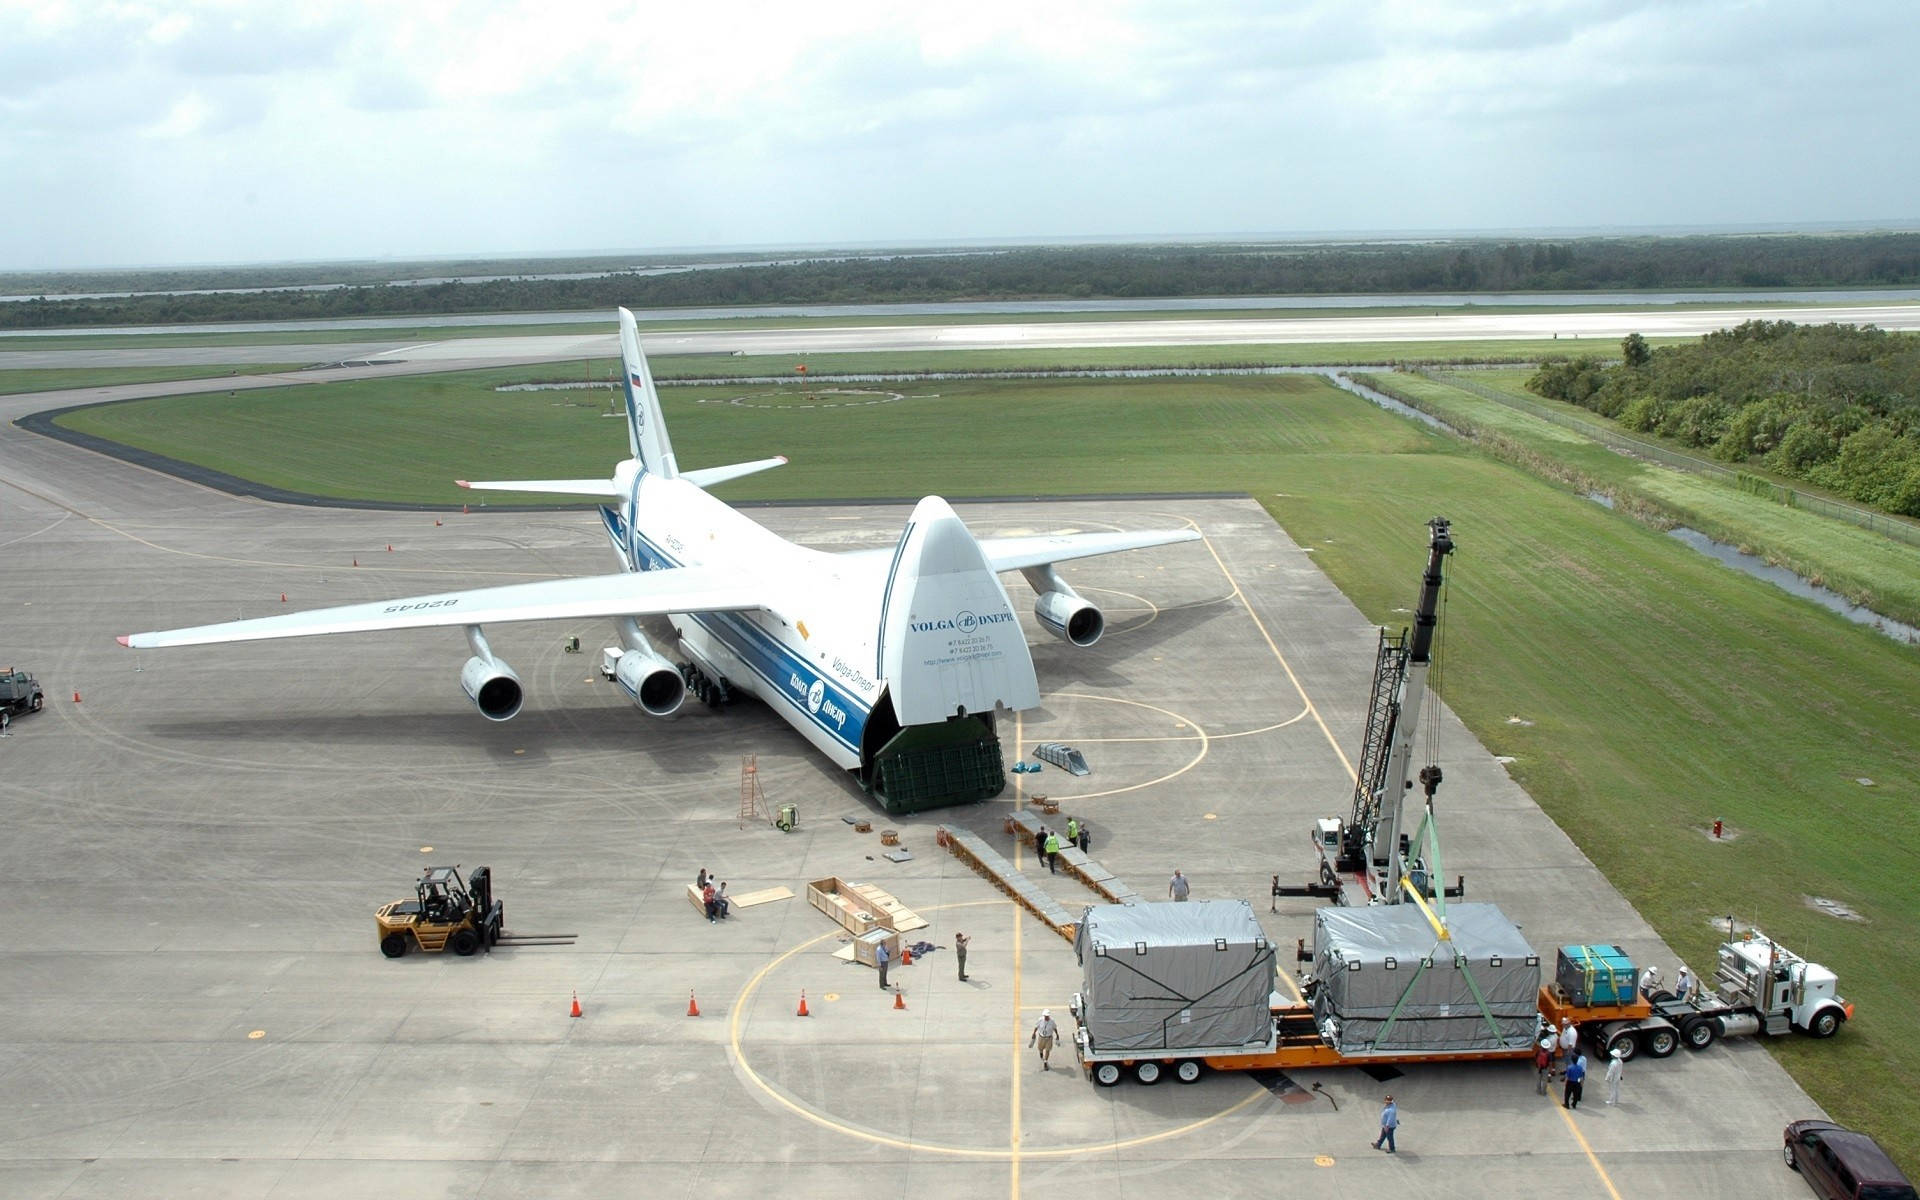 Cargo Aircraft At The Airport